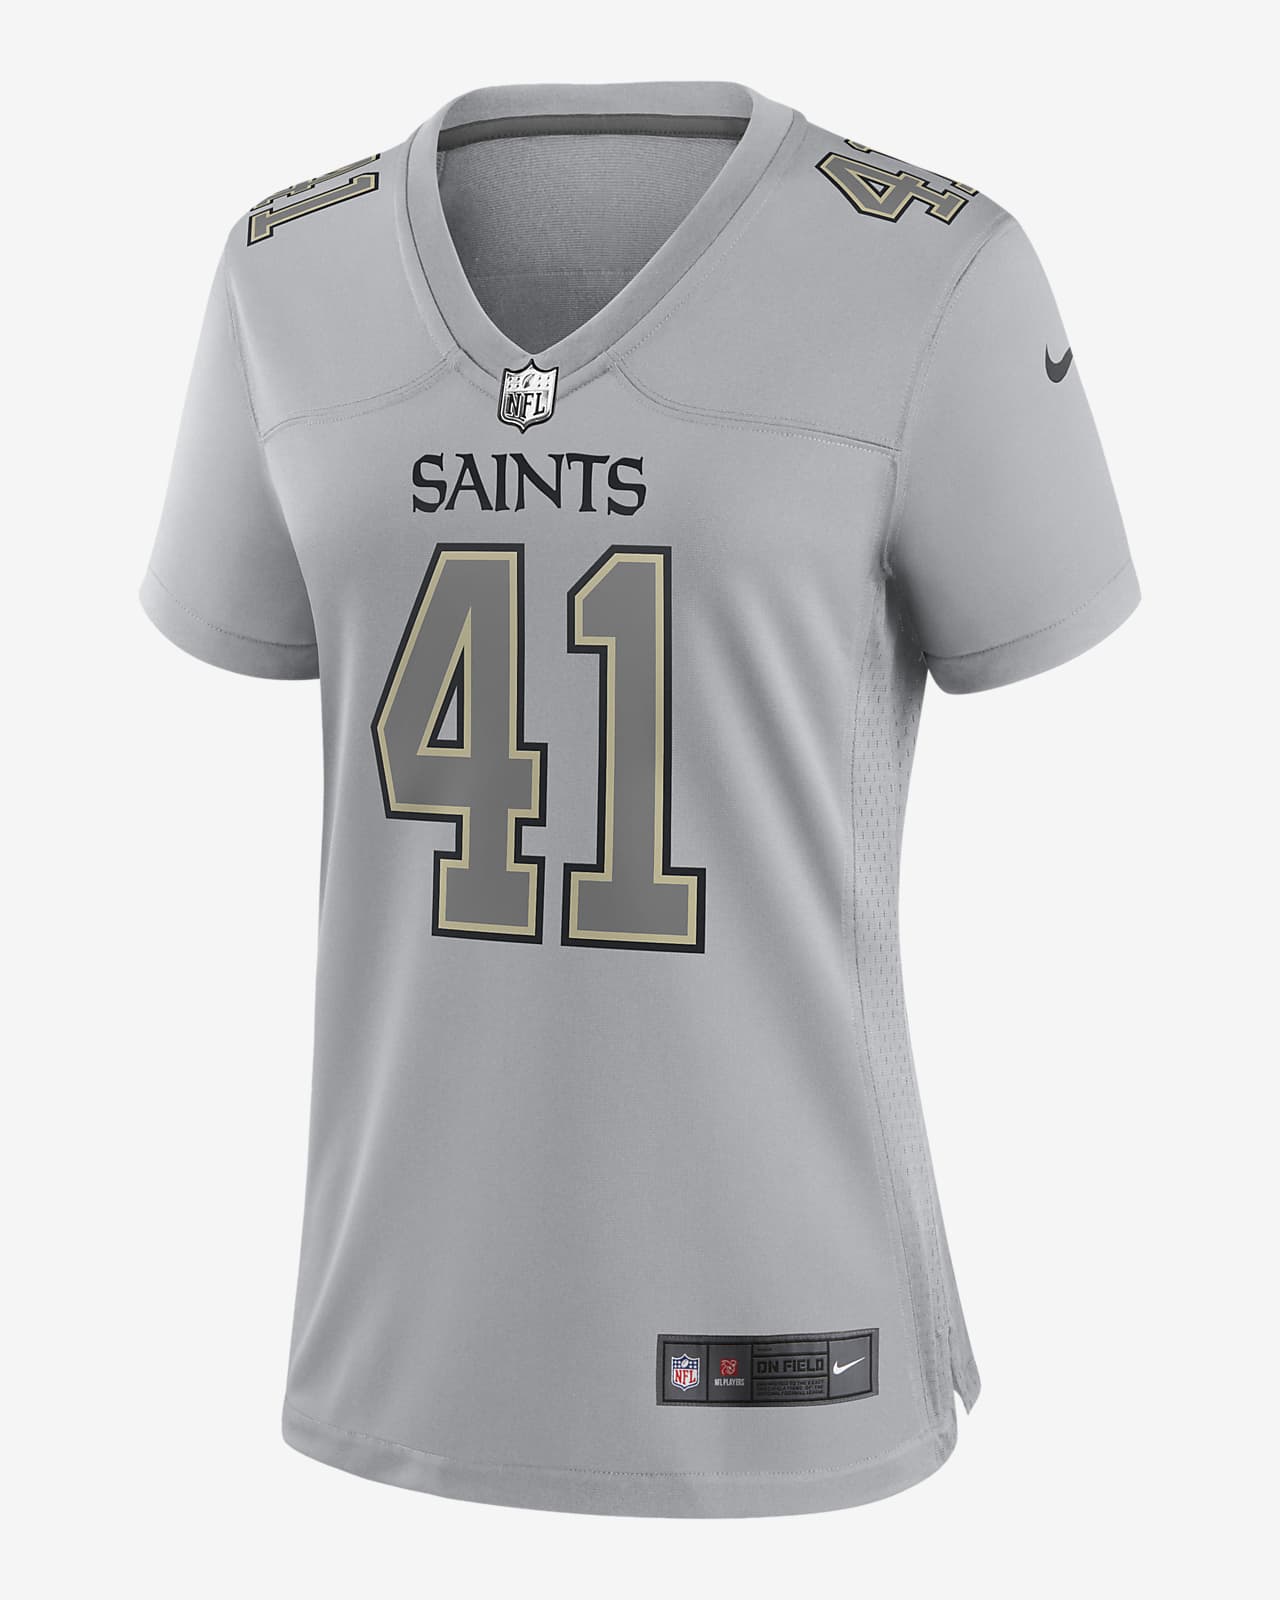 NFL New Orleans Saints Atmosphere (Alvin Kamara) Women's Fashion Football Jersey